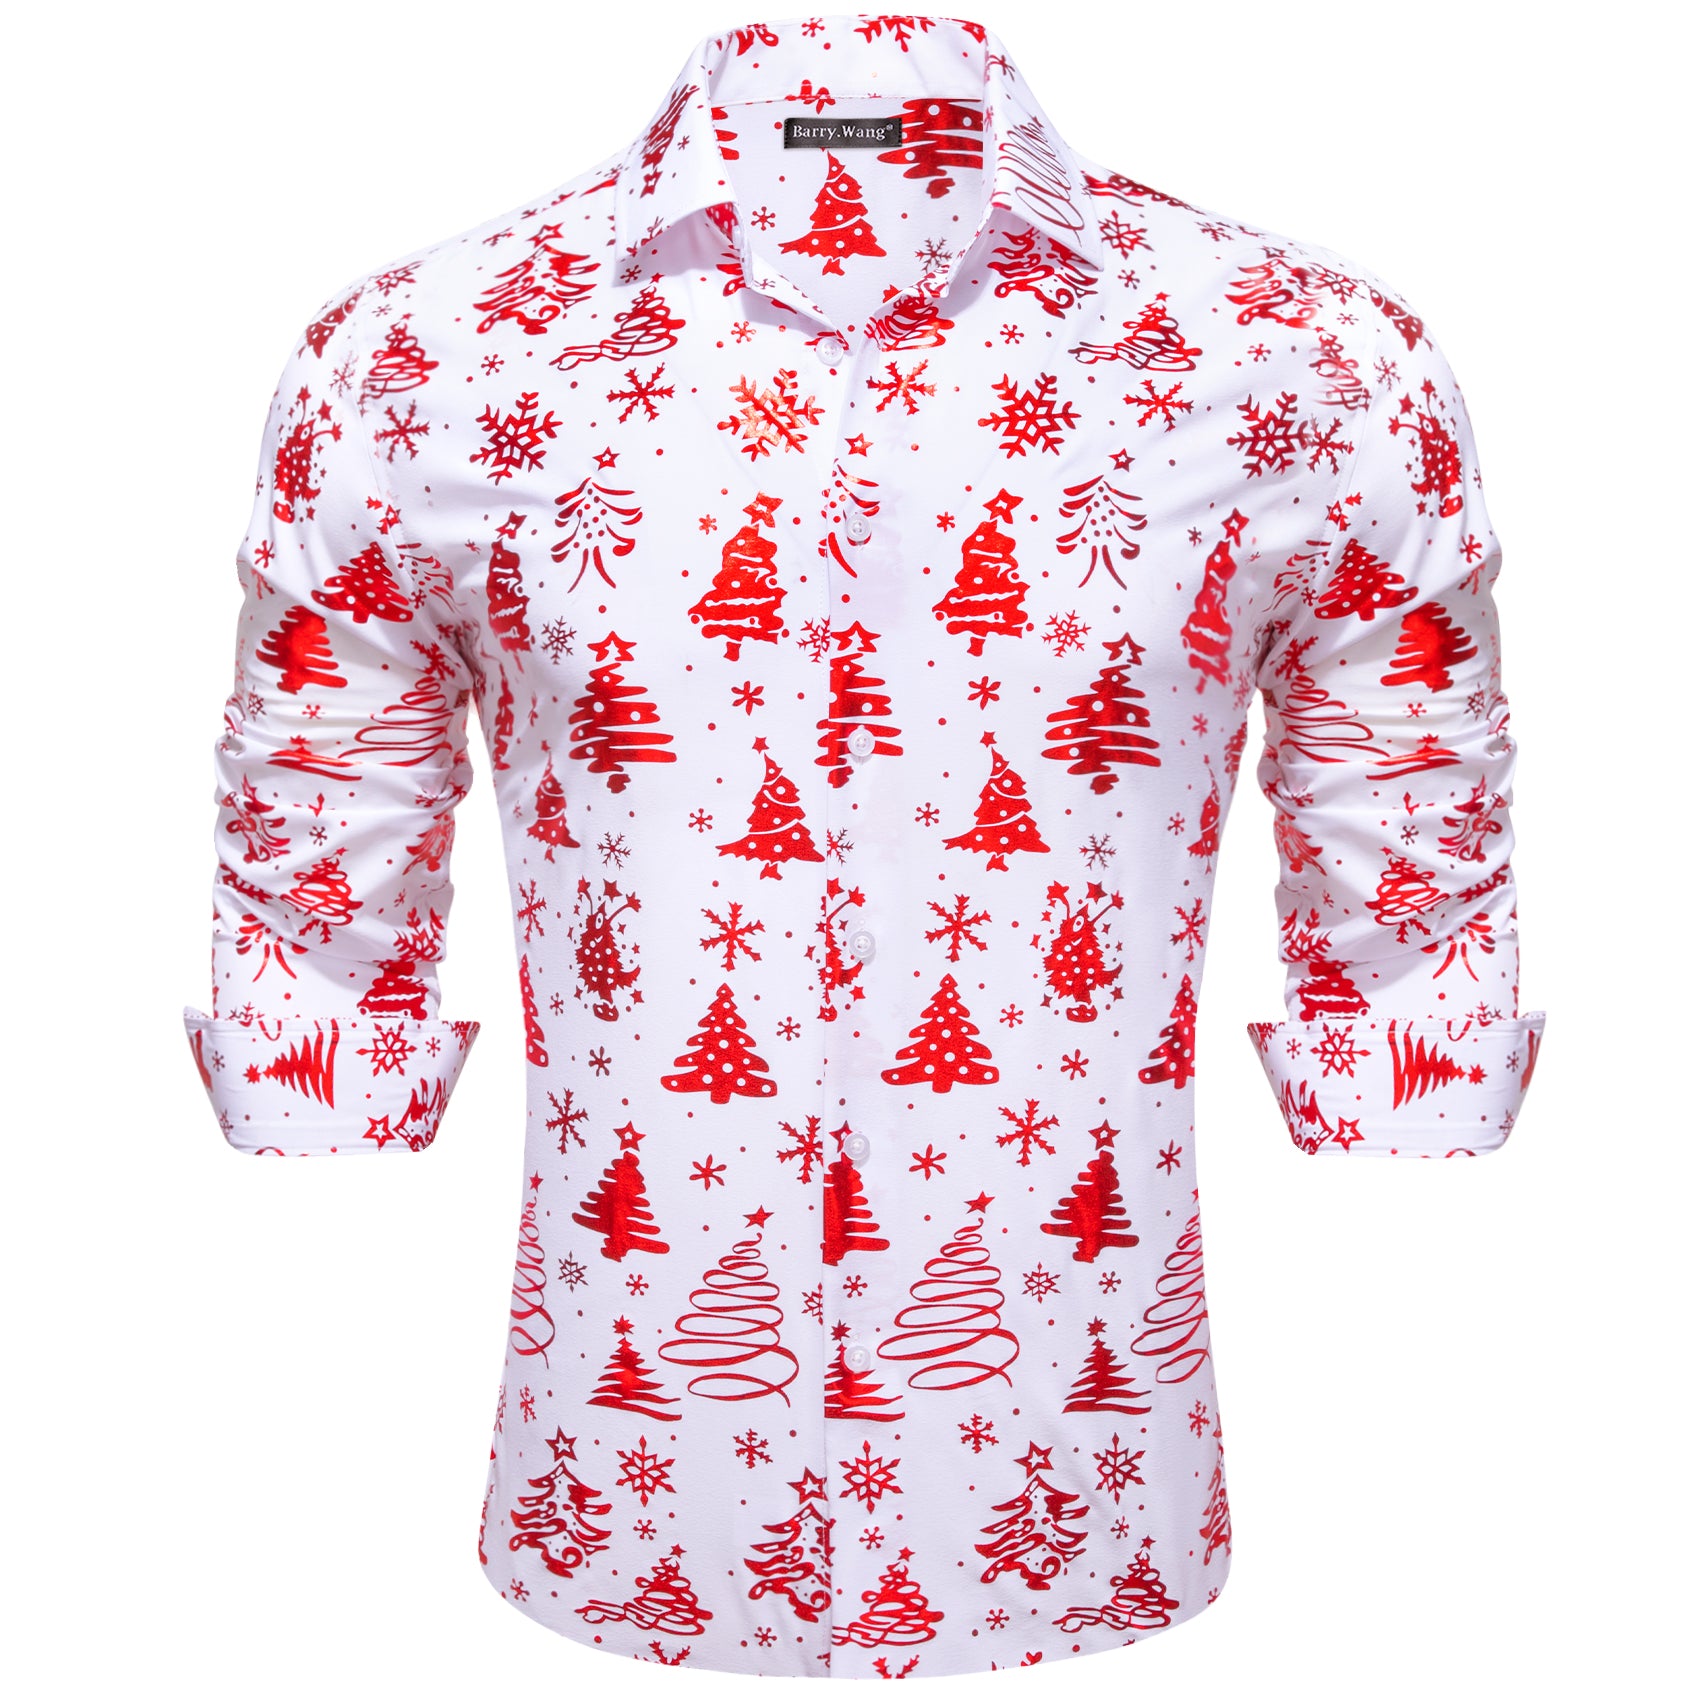 Barry.wang Christmas Shirt White Red Pattern Floral Silk Men's Shirt